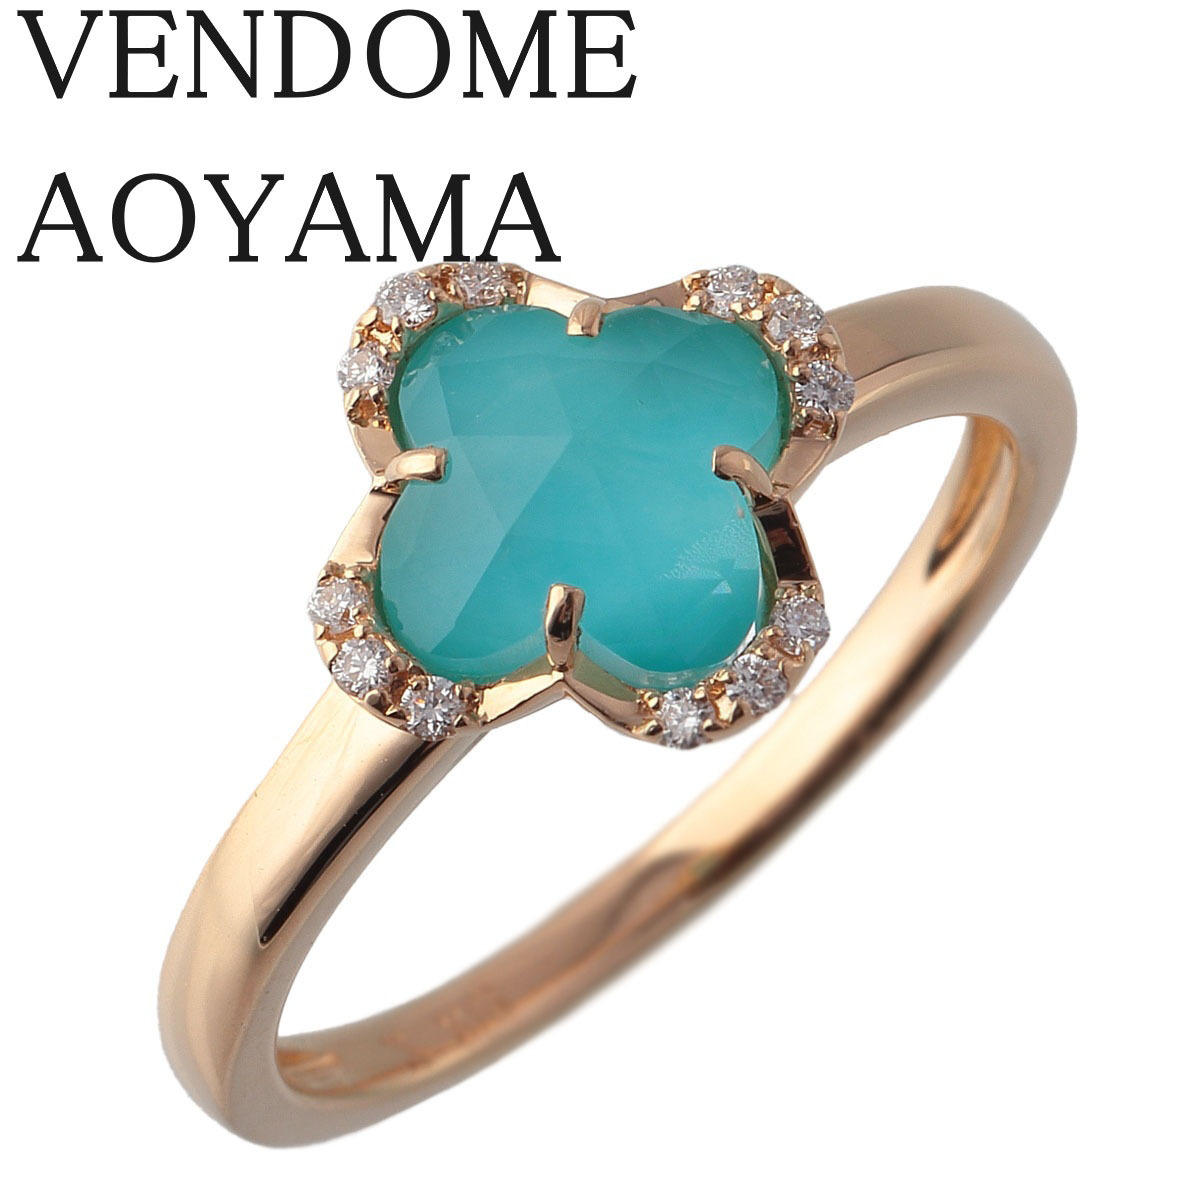  Vendome Aoyama diamond ring turquoise quartz current model 11 number K18YG new goods finishing settled VENDOME AOYAMA VA[16569]